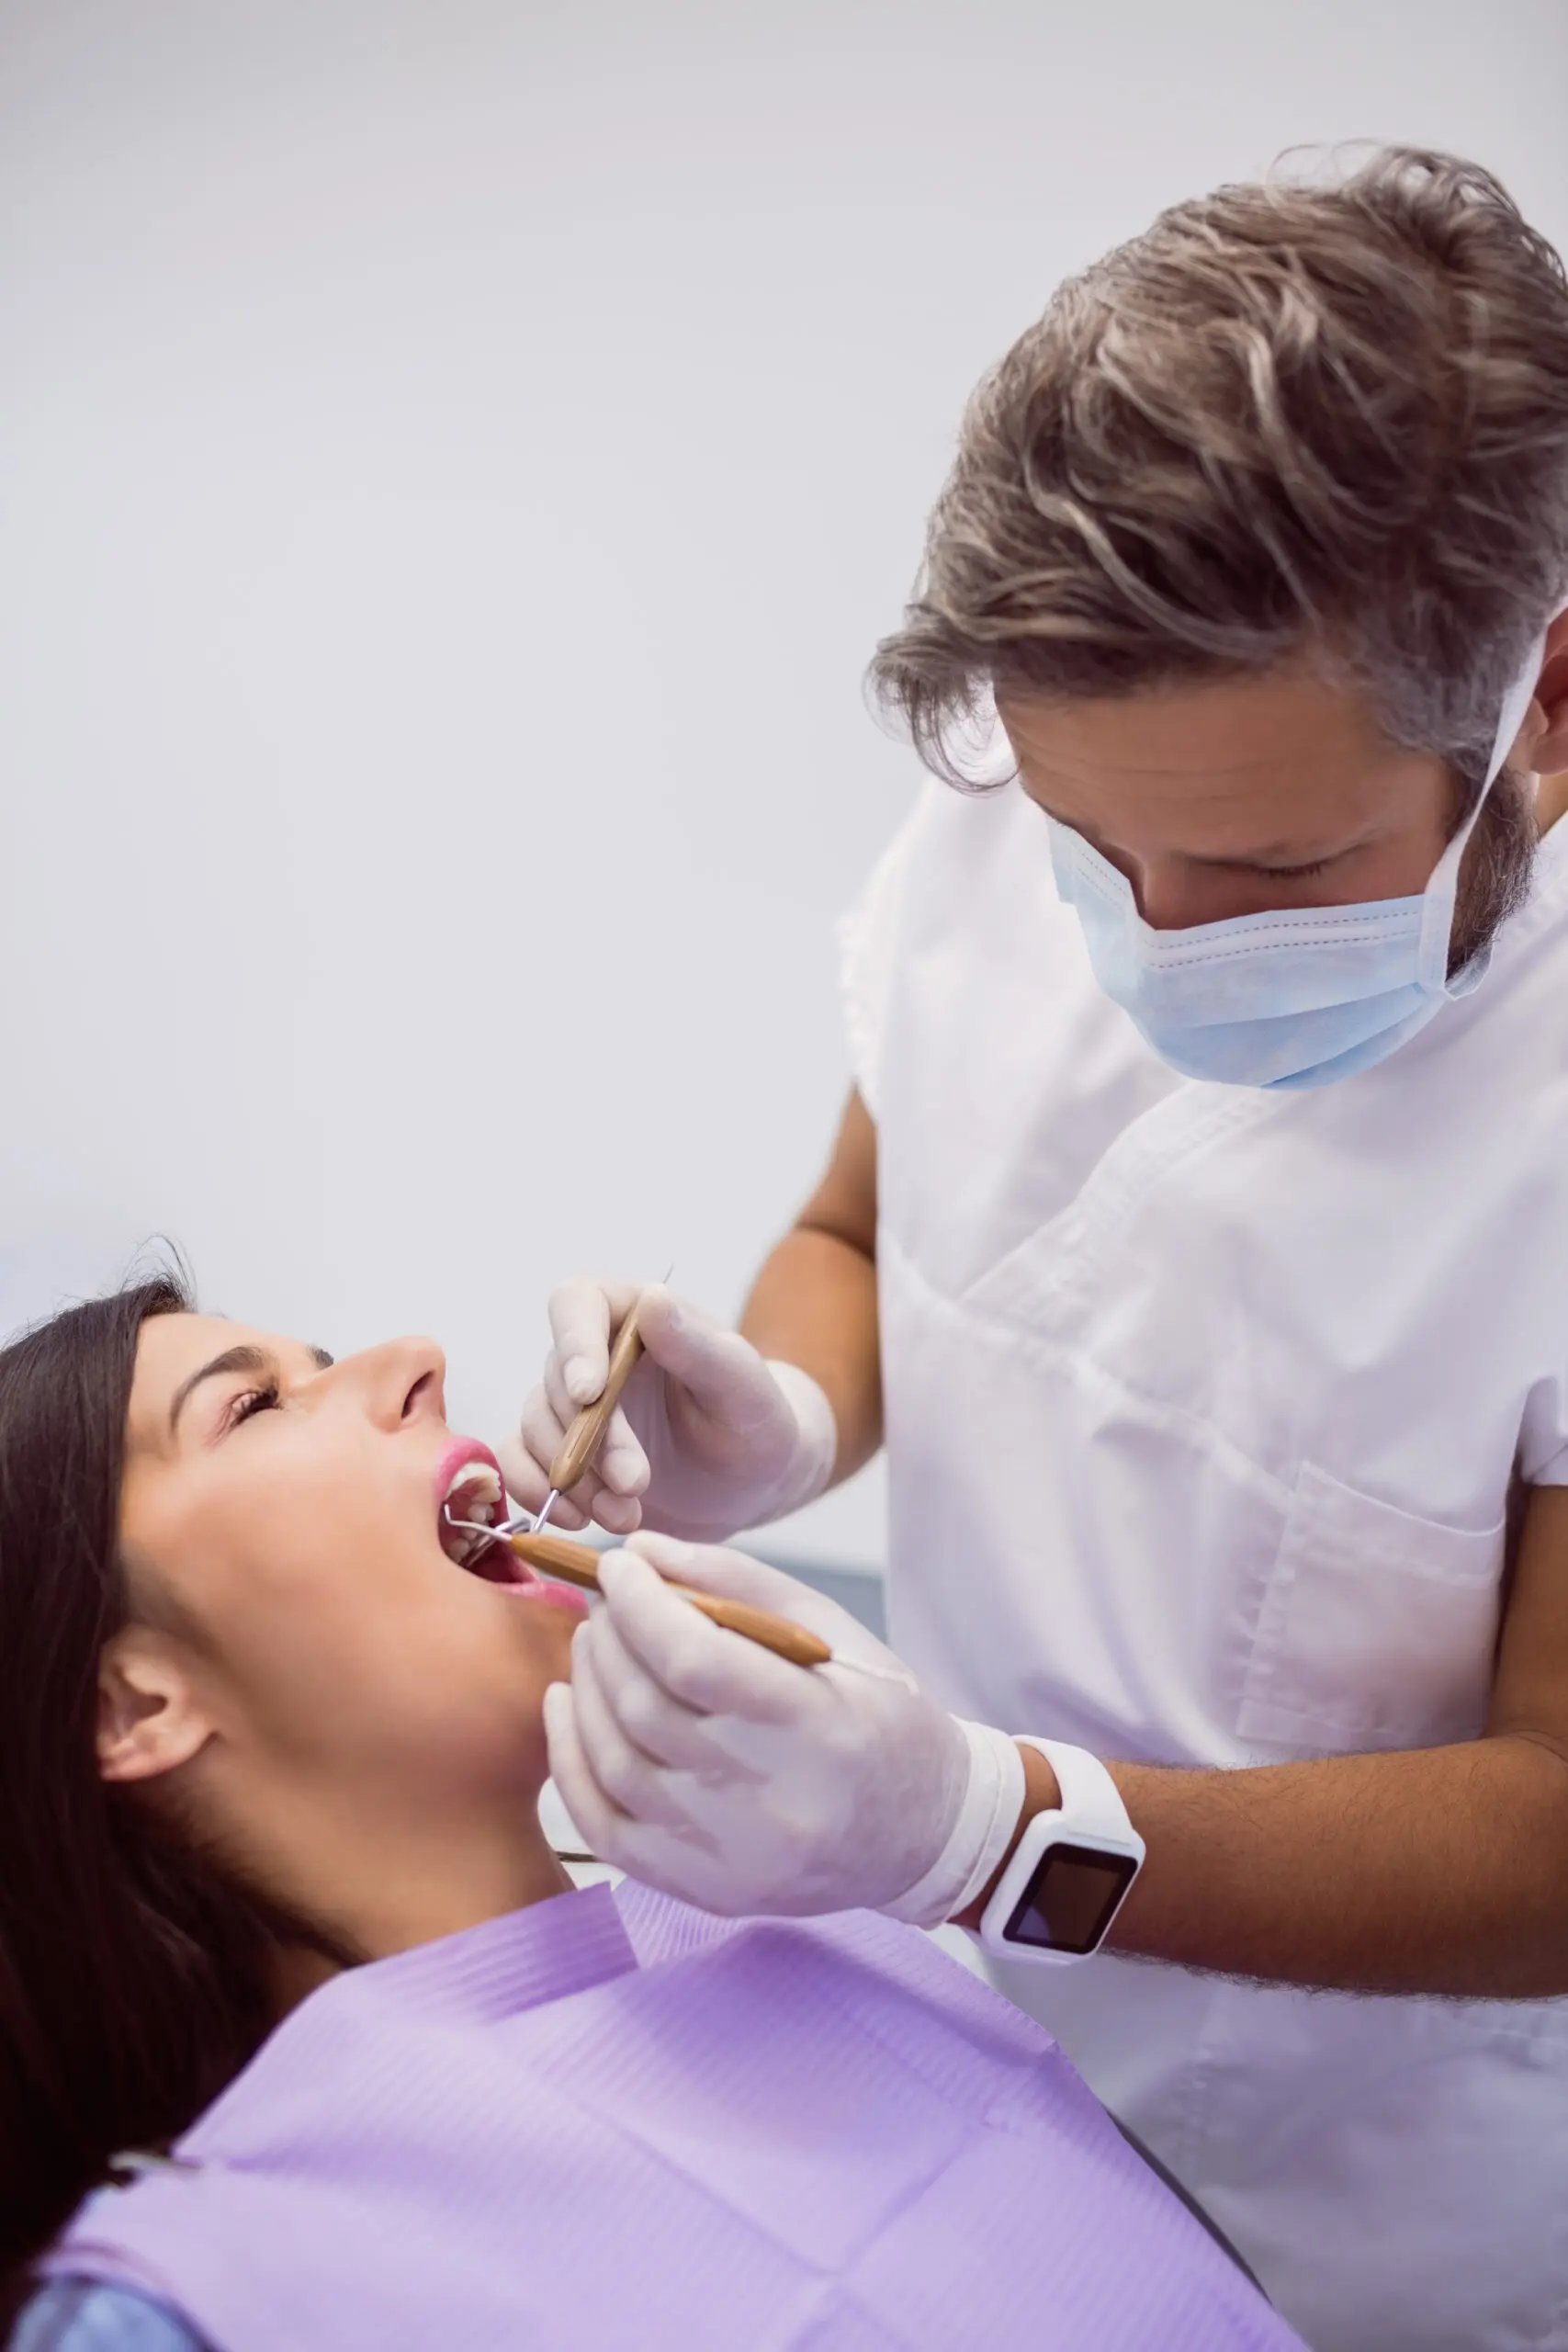 dentist examining female patient teeth in clinic